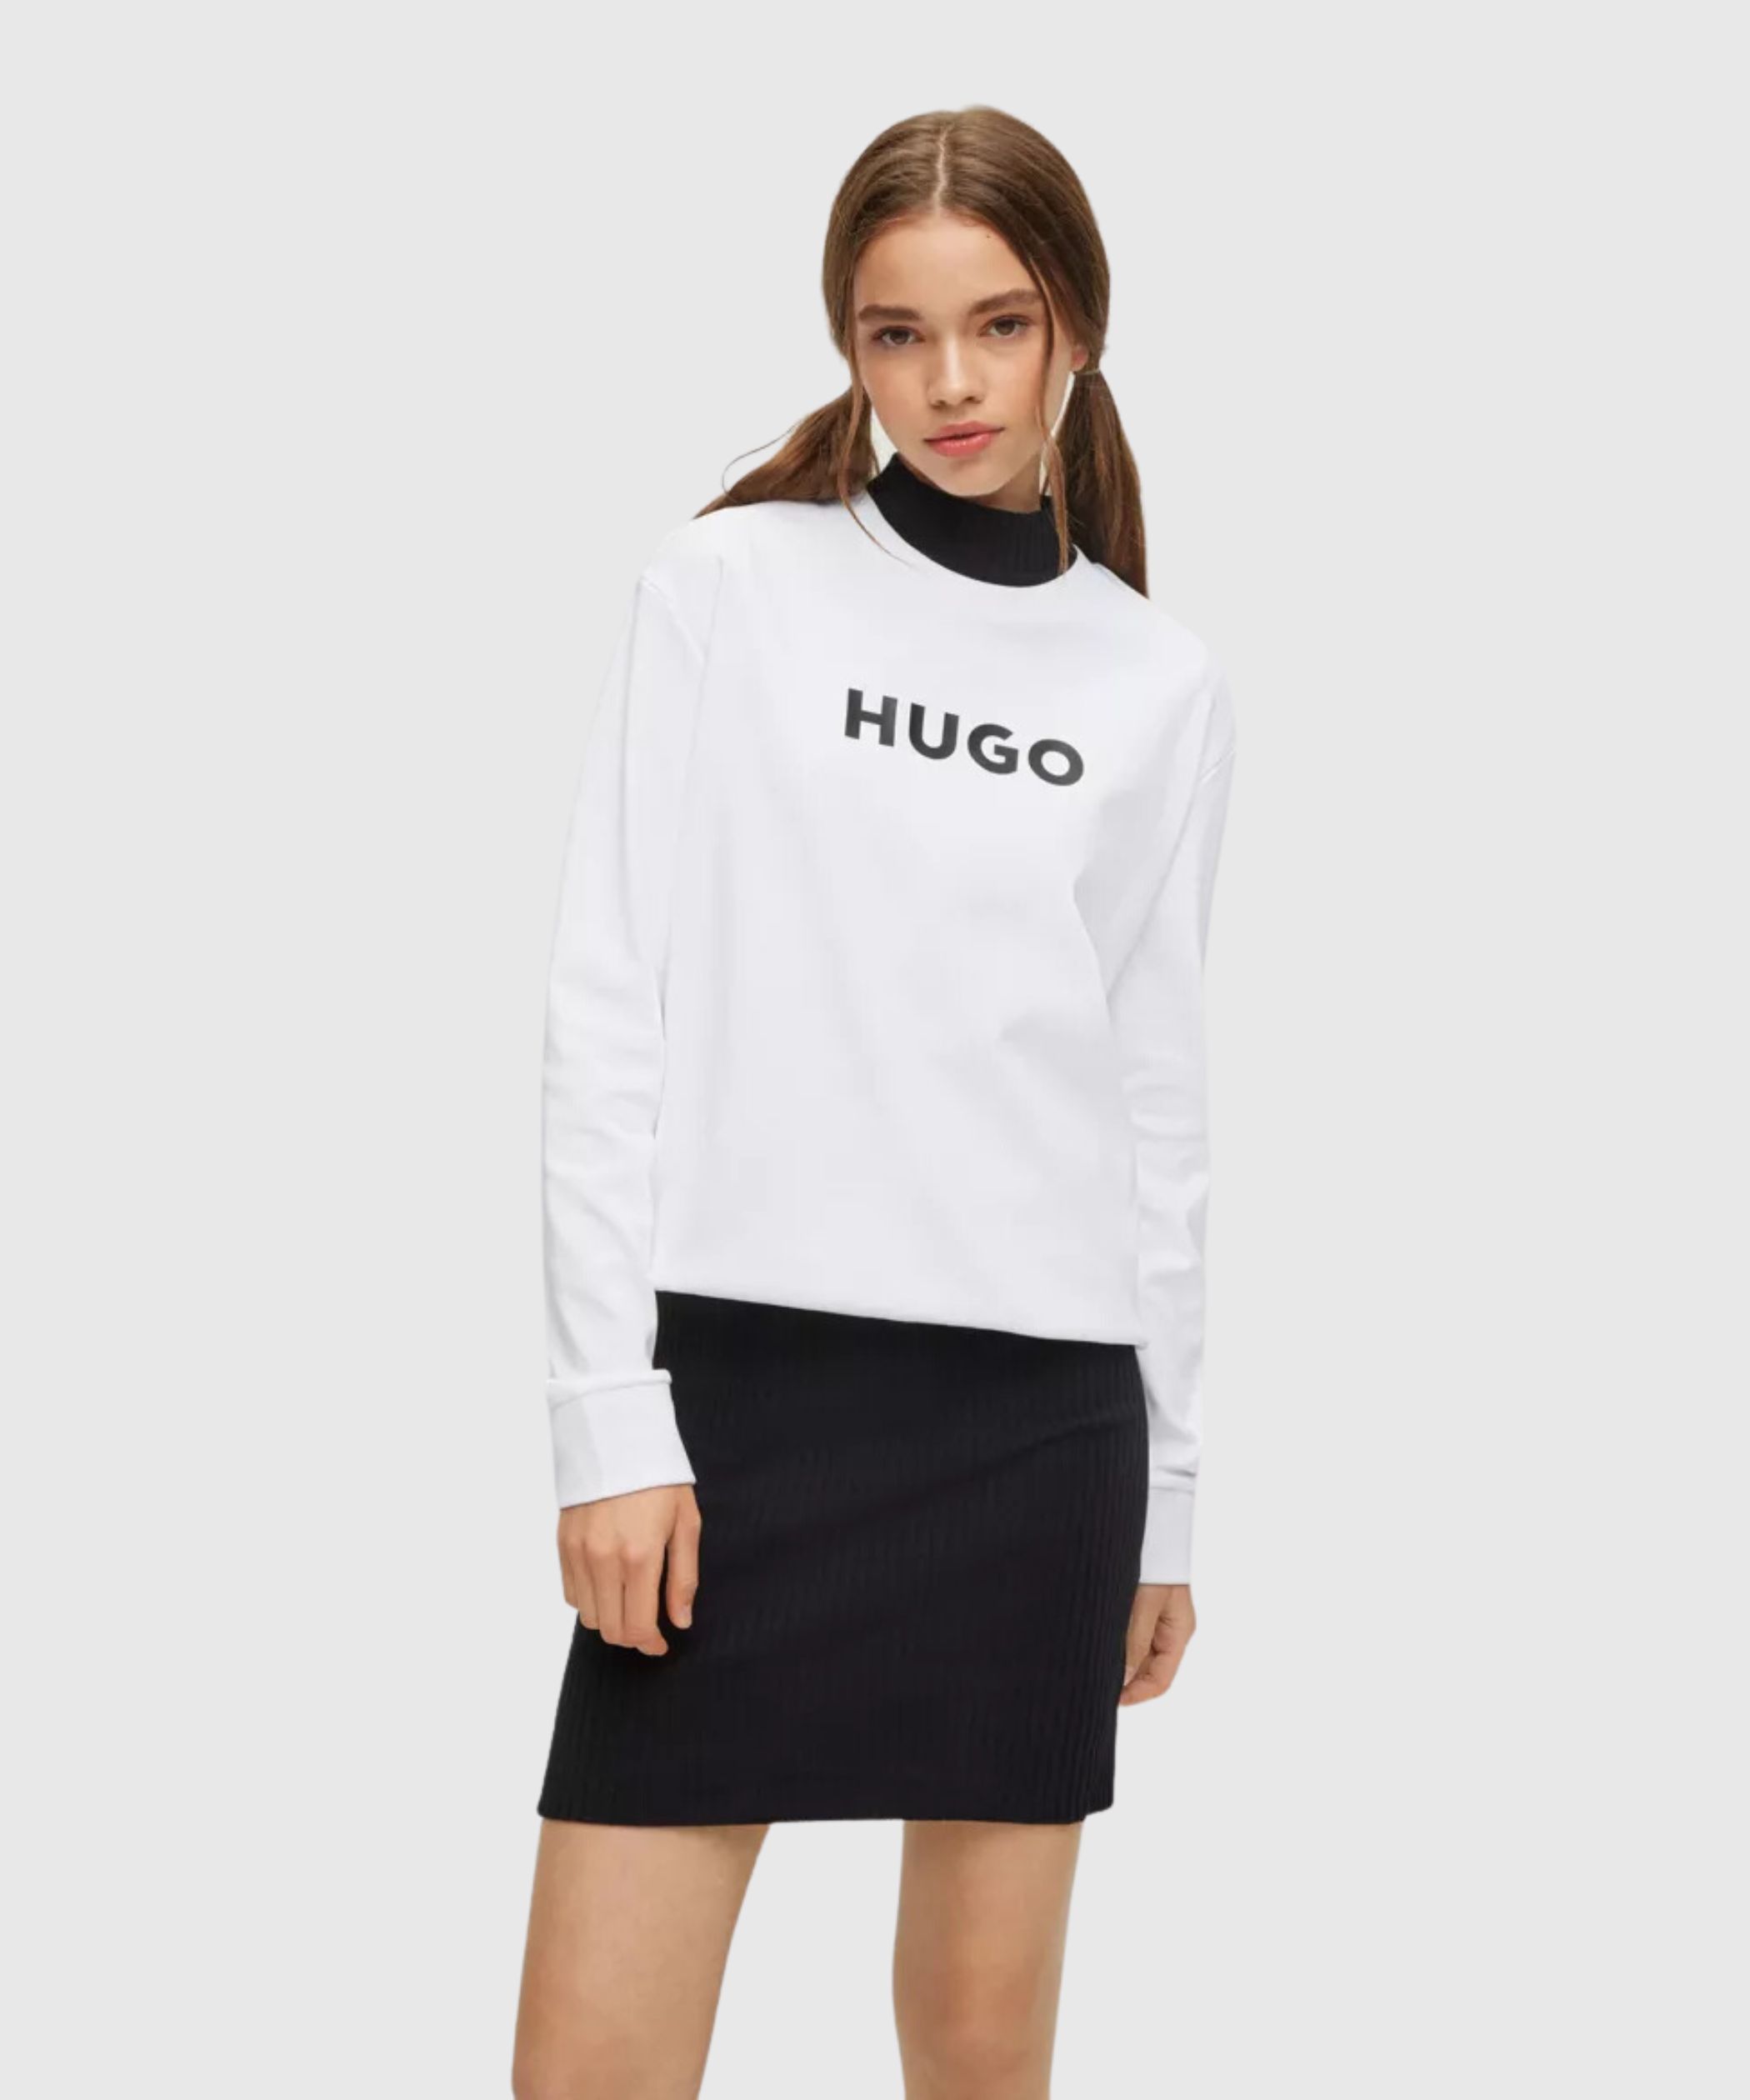 The HUGO Sweater